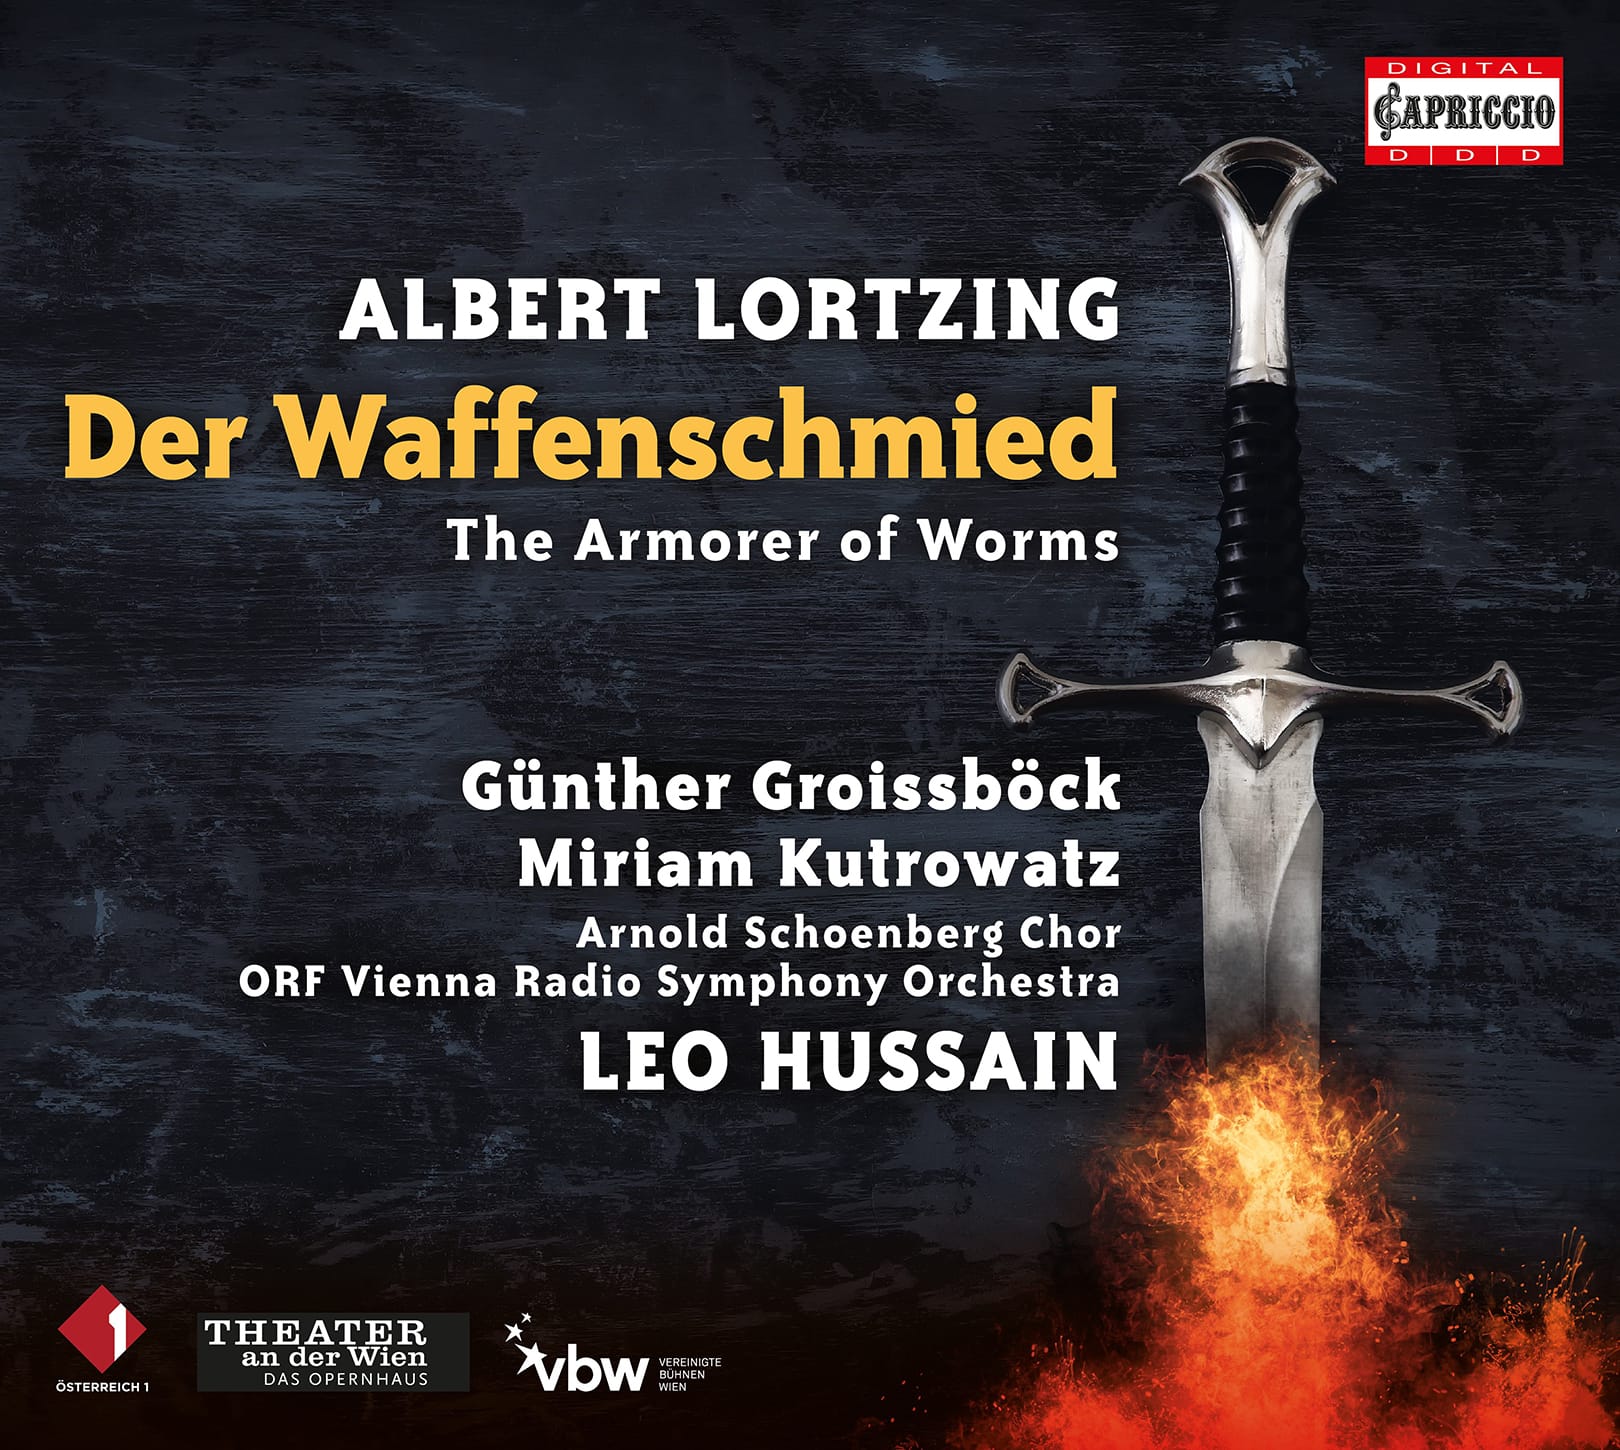 Leo Hussain conducts Lorzing: “Der Waffenschmied”